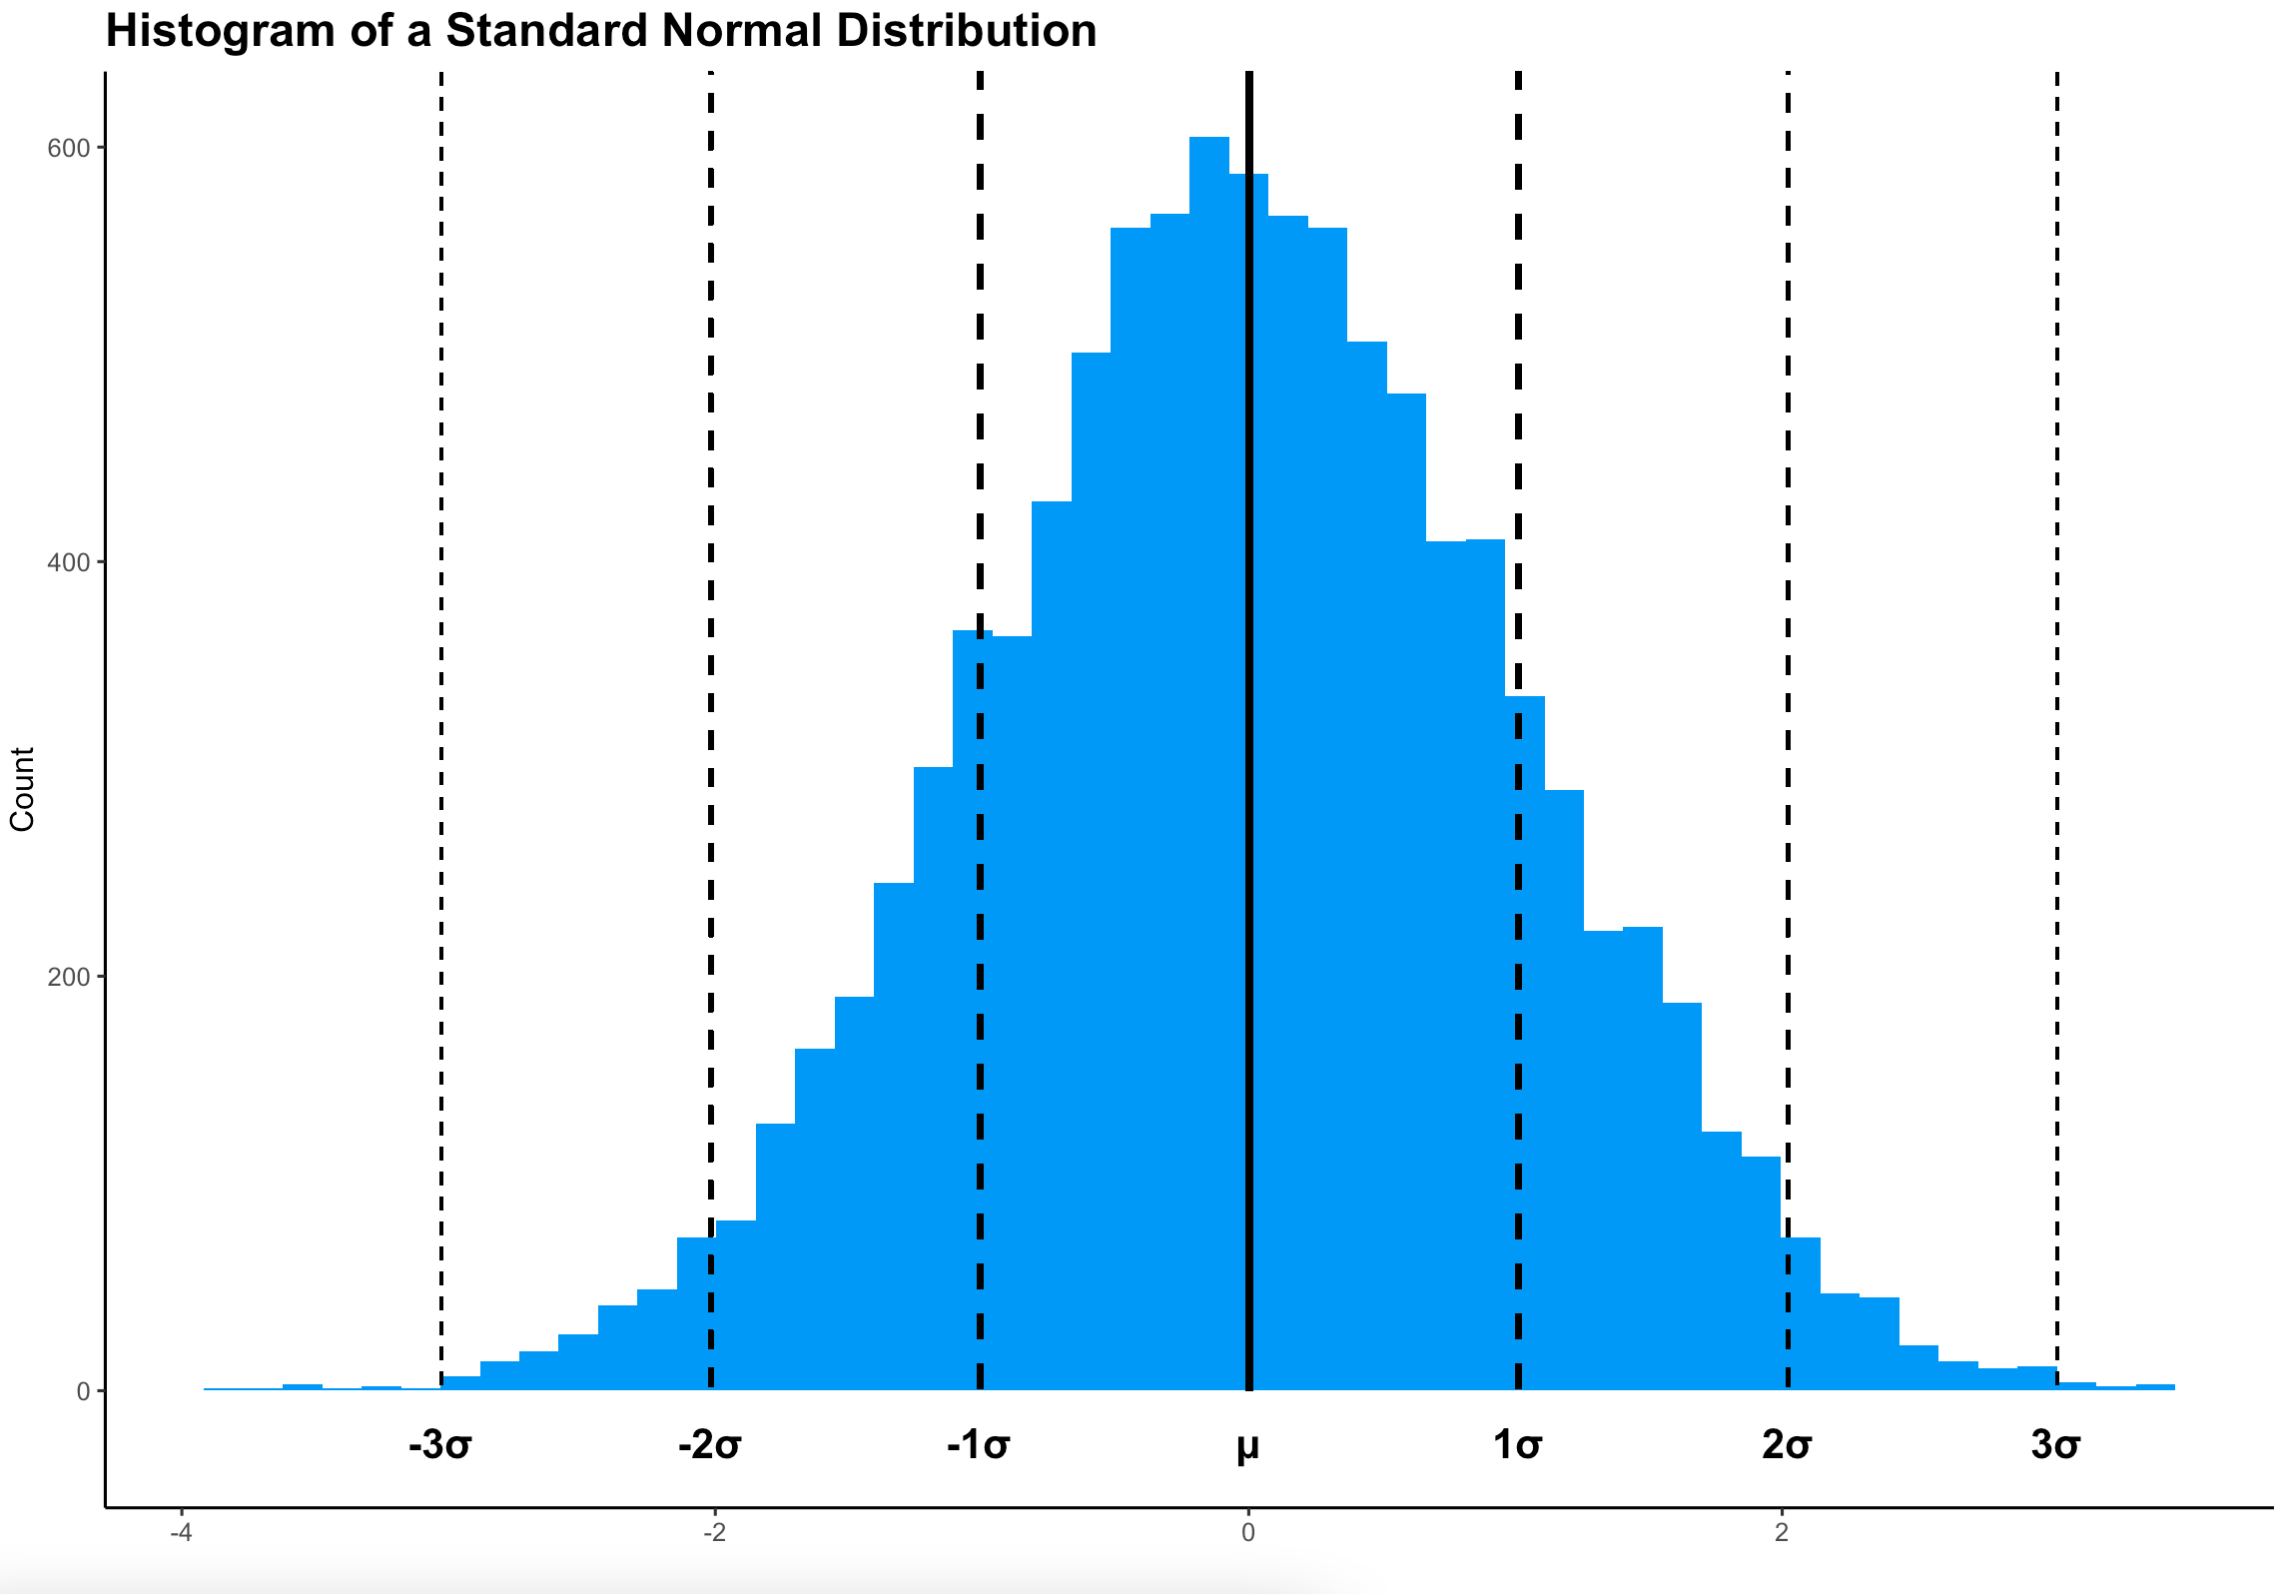 Image 1 - Histogram of a standard normal distribution